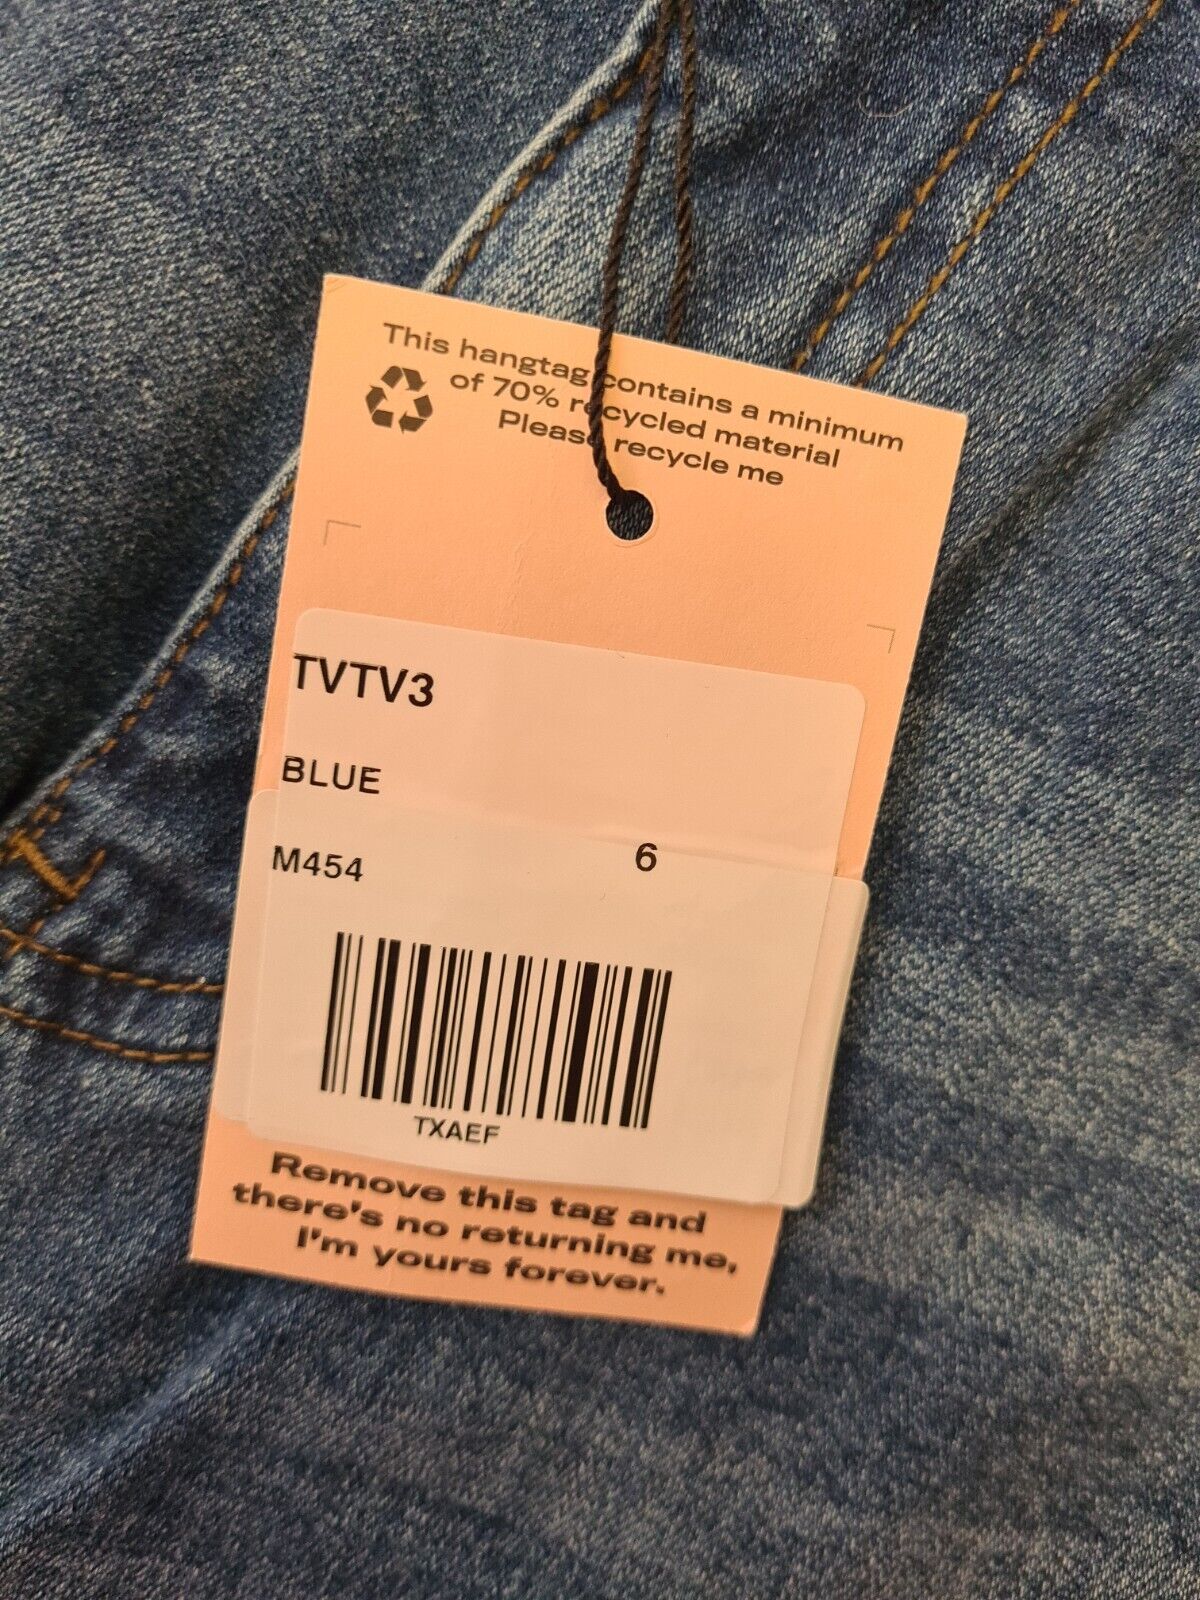 Missguided Slim Fit Flared Jeans Size UK 6 **** V246